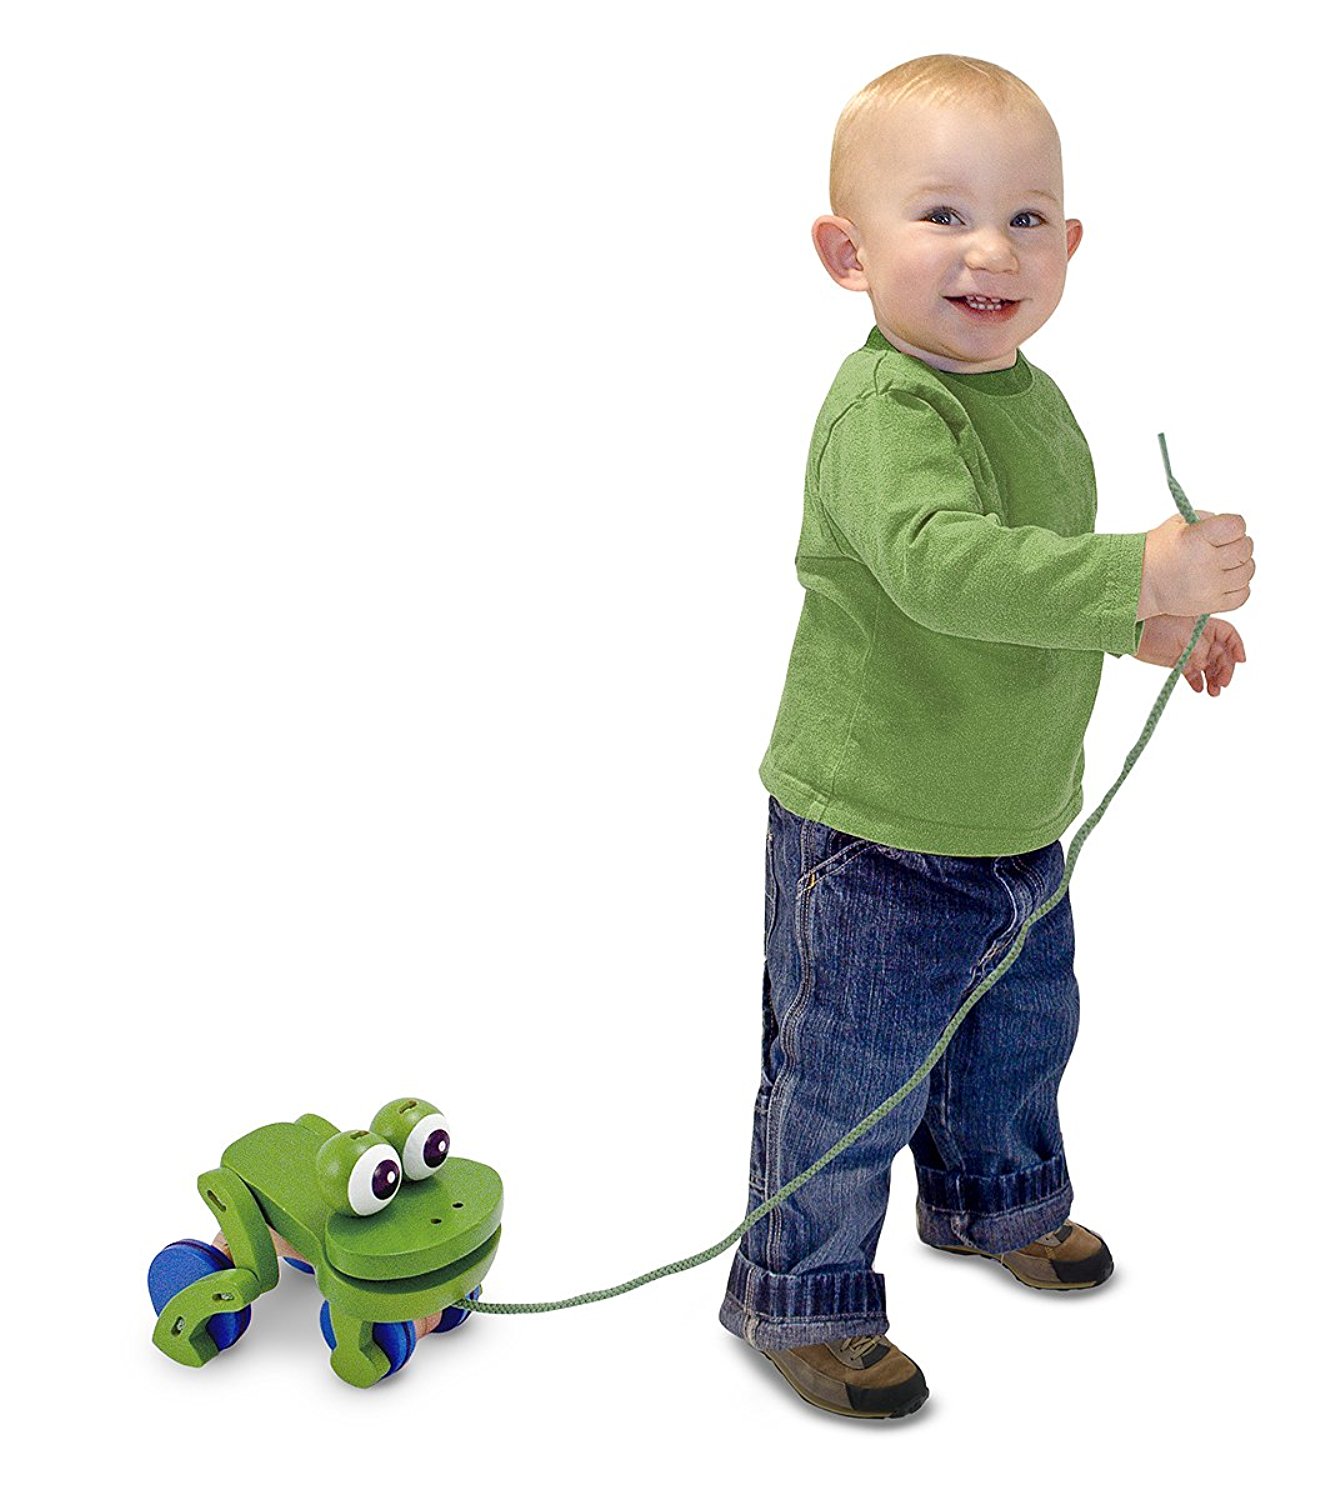 Amazon.com: Melissa & Doug Deluxe Frolicking Frog Wooden Pull Toy ...